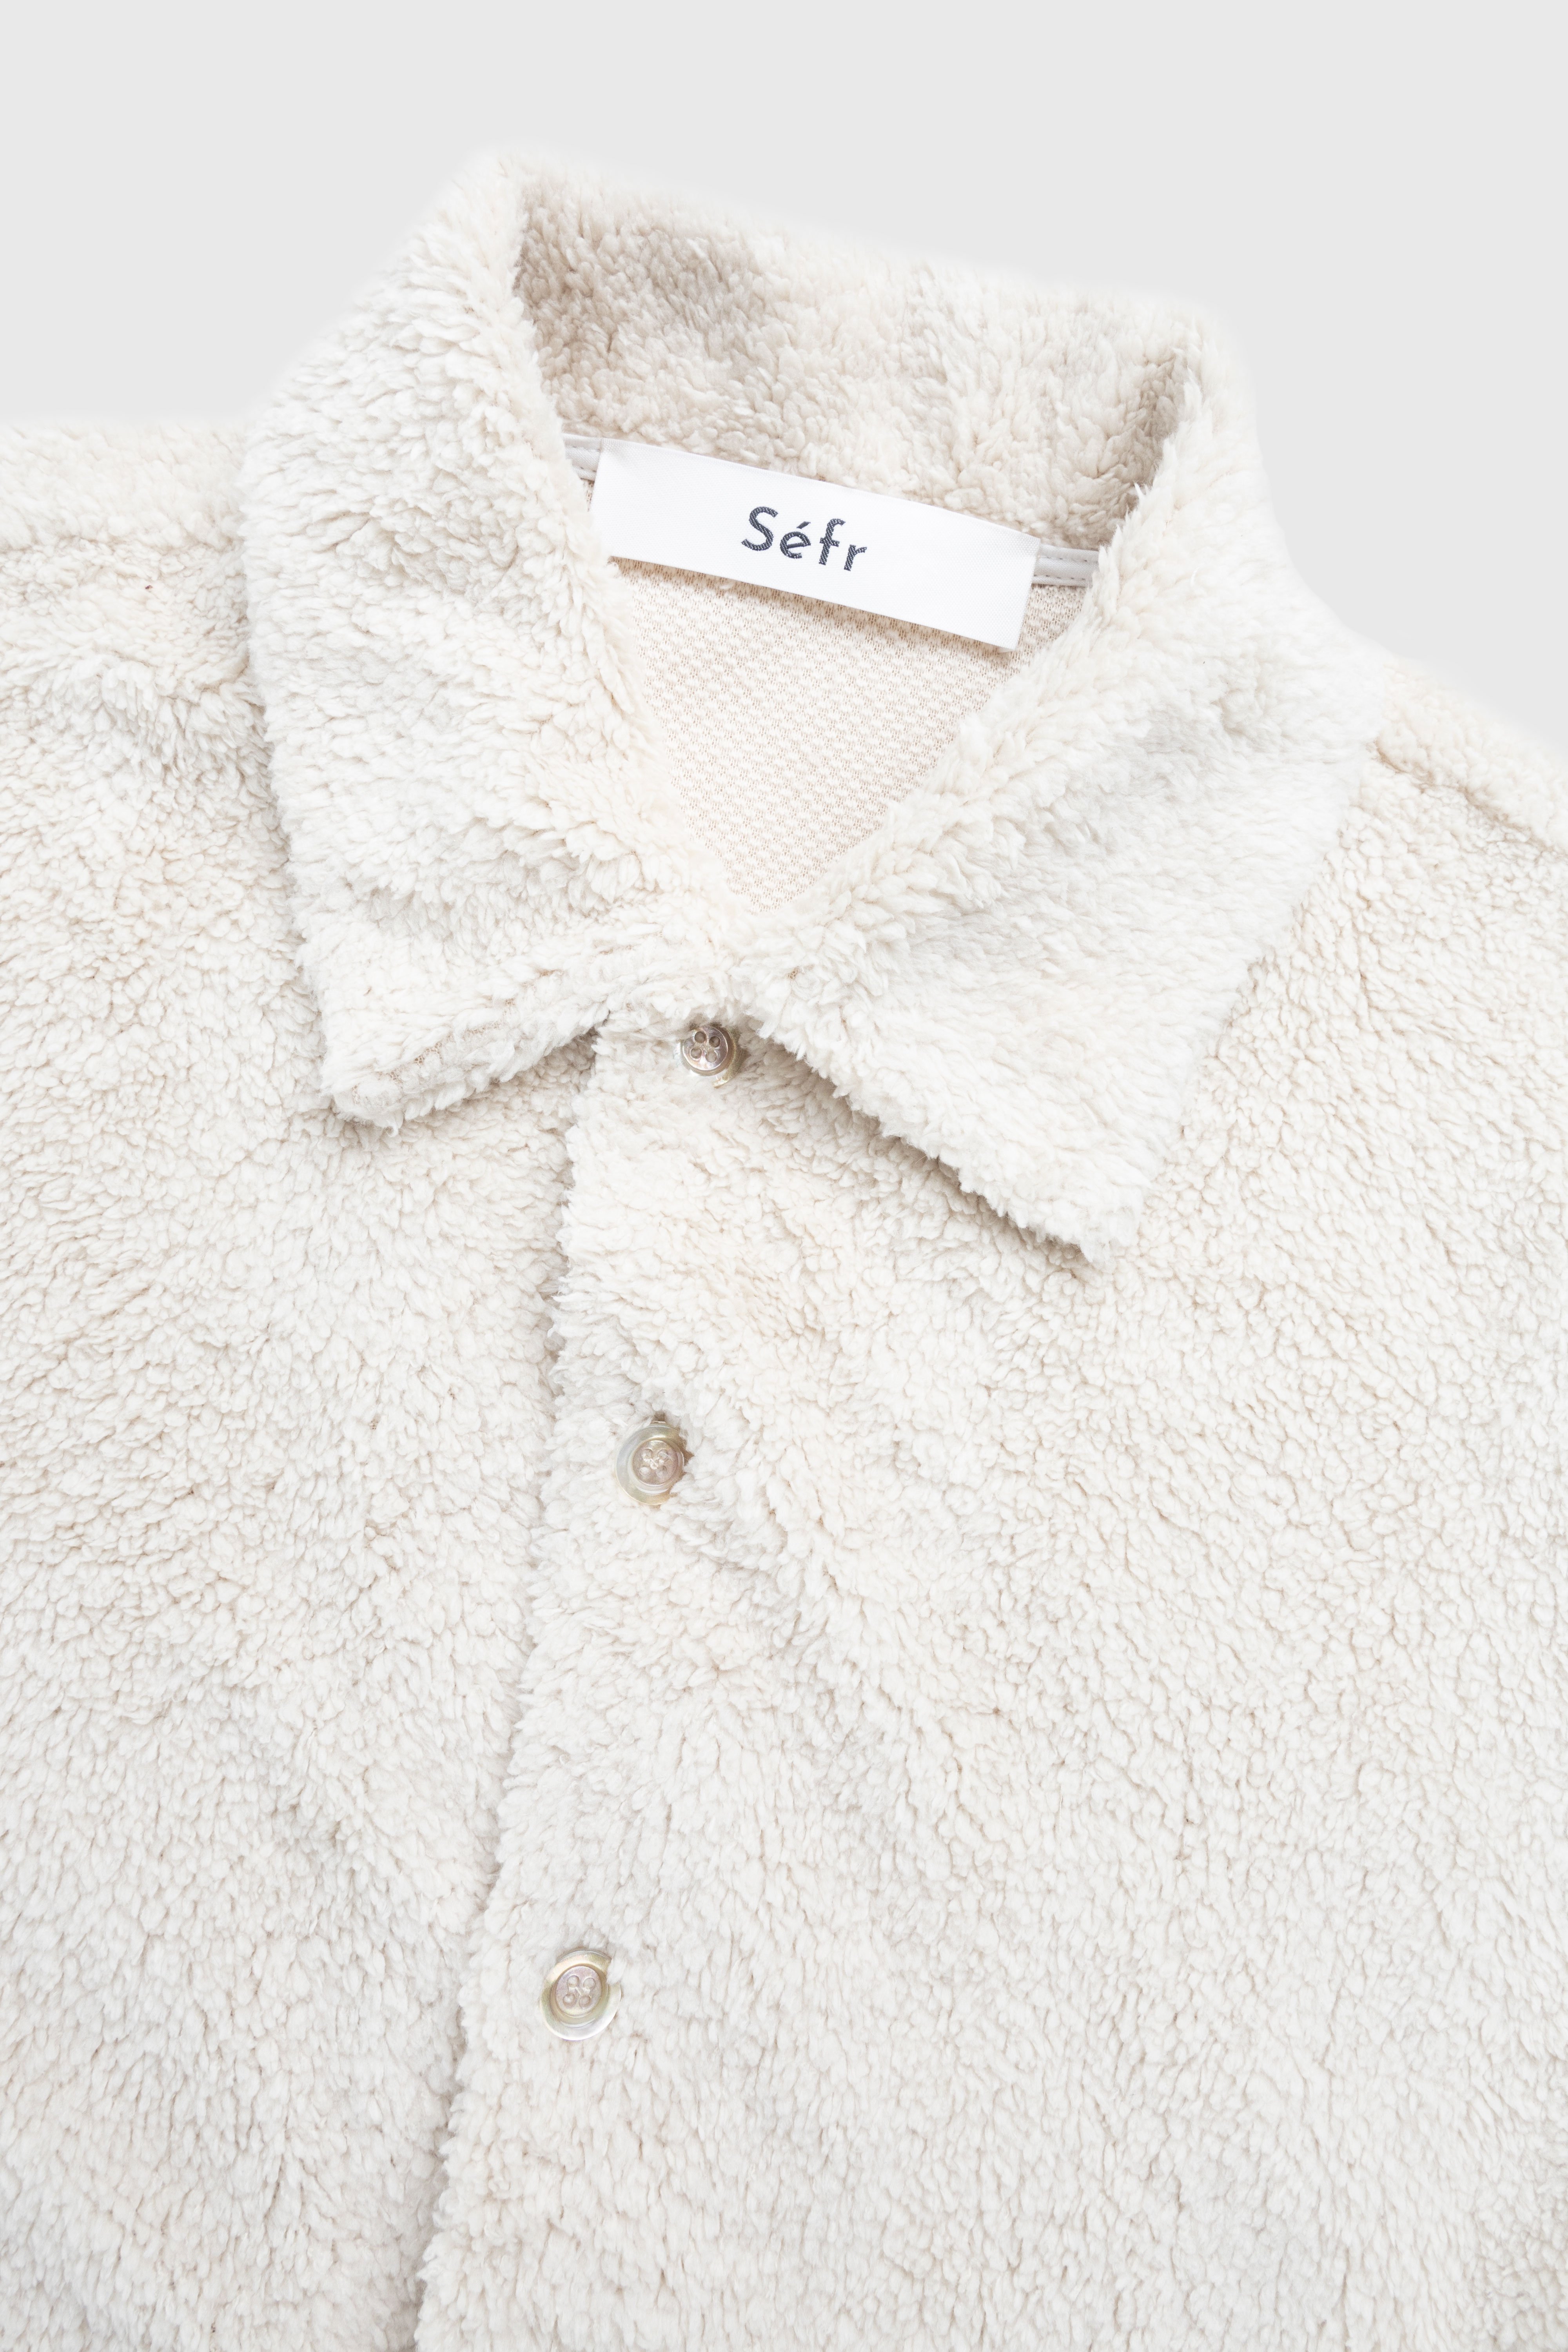 Séfr - Sense Overshirt Polar White Fleece - Clothing - White - Image 5